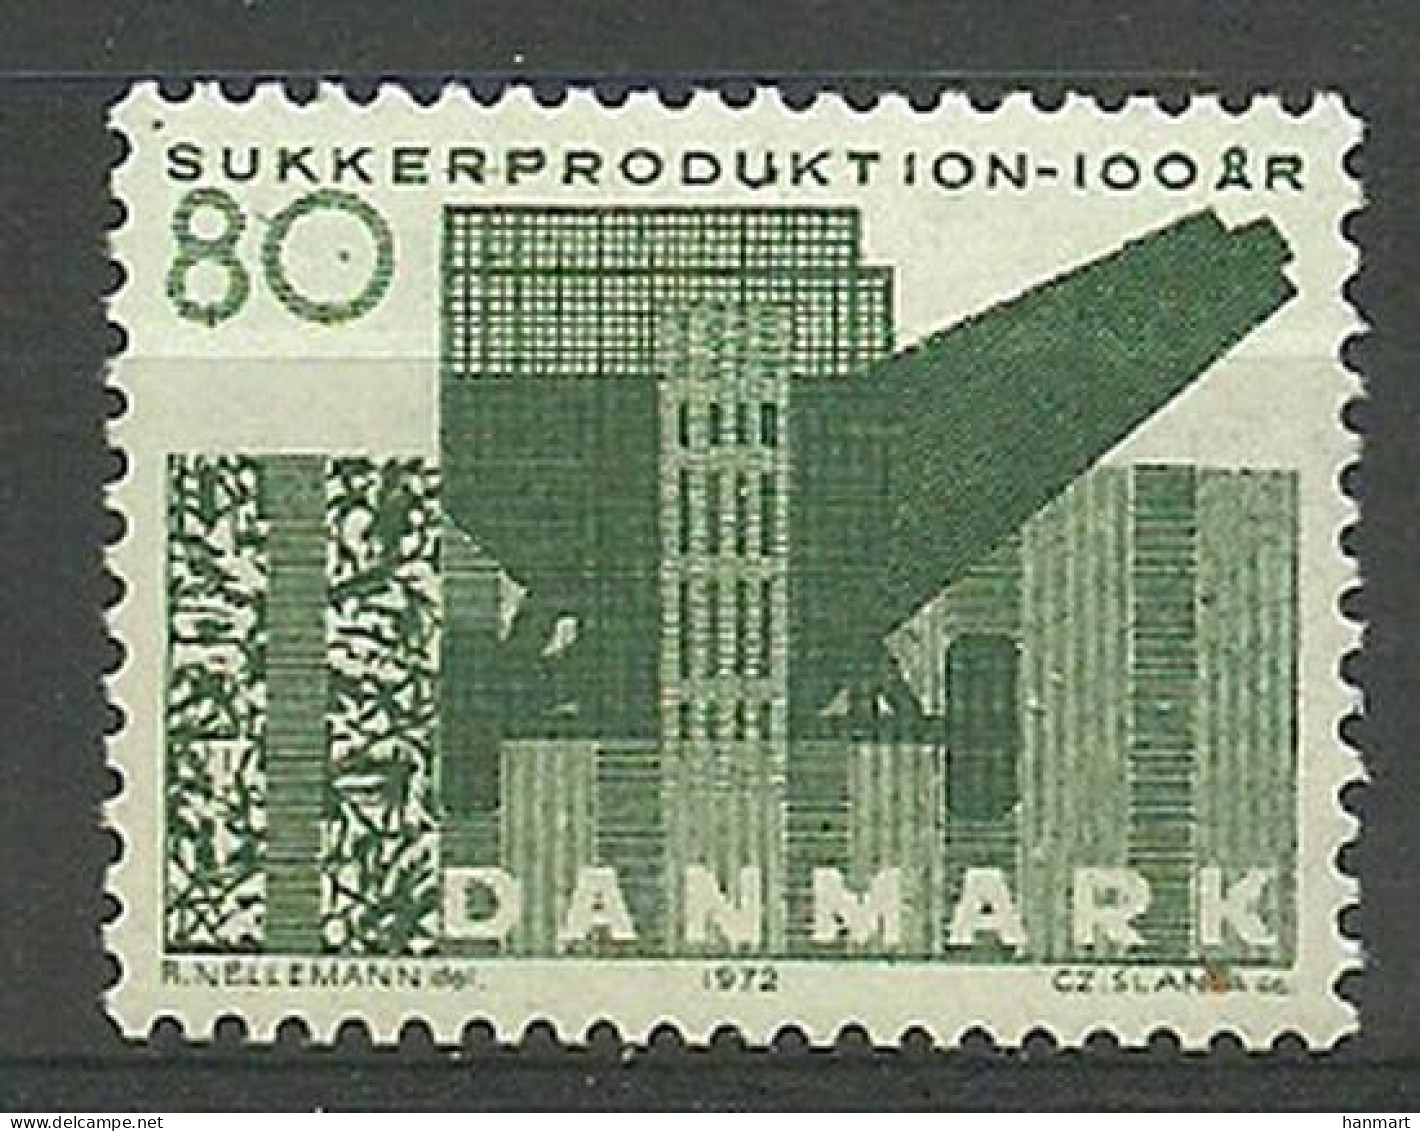 Denmark 1972 Mi 519 MNH  (ZE3 DNM519) - Otros